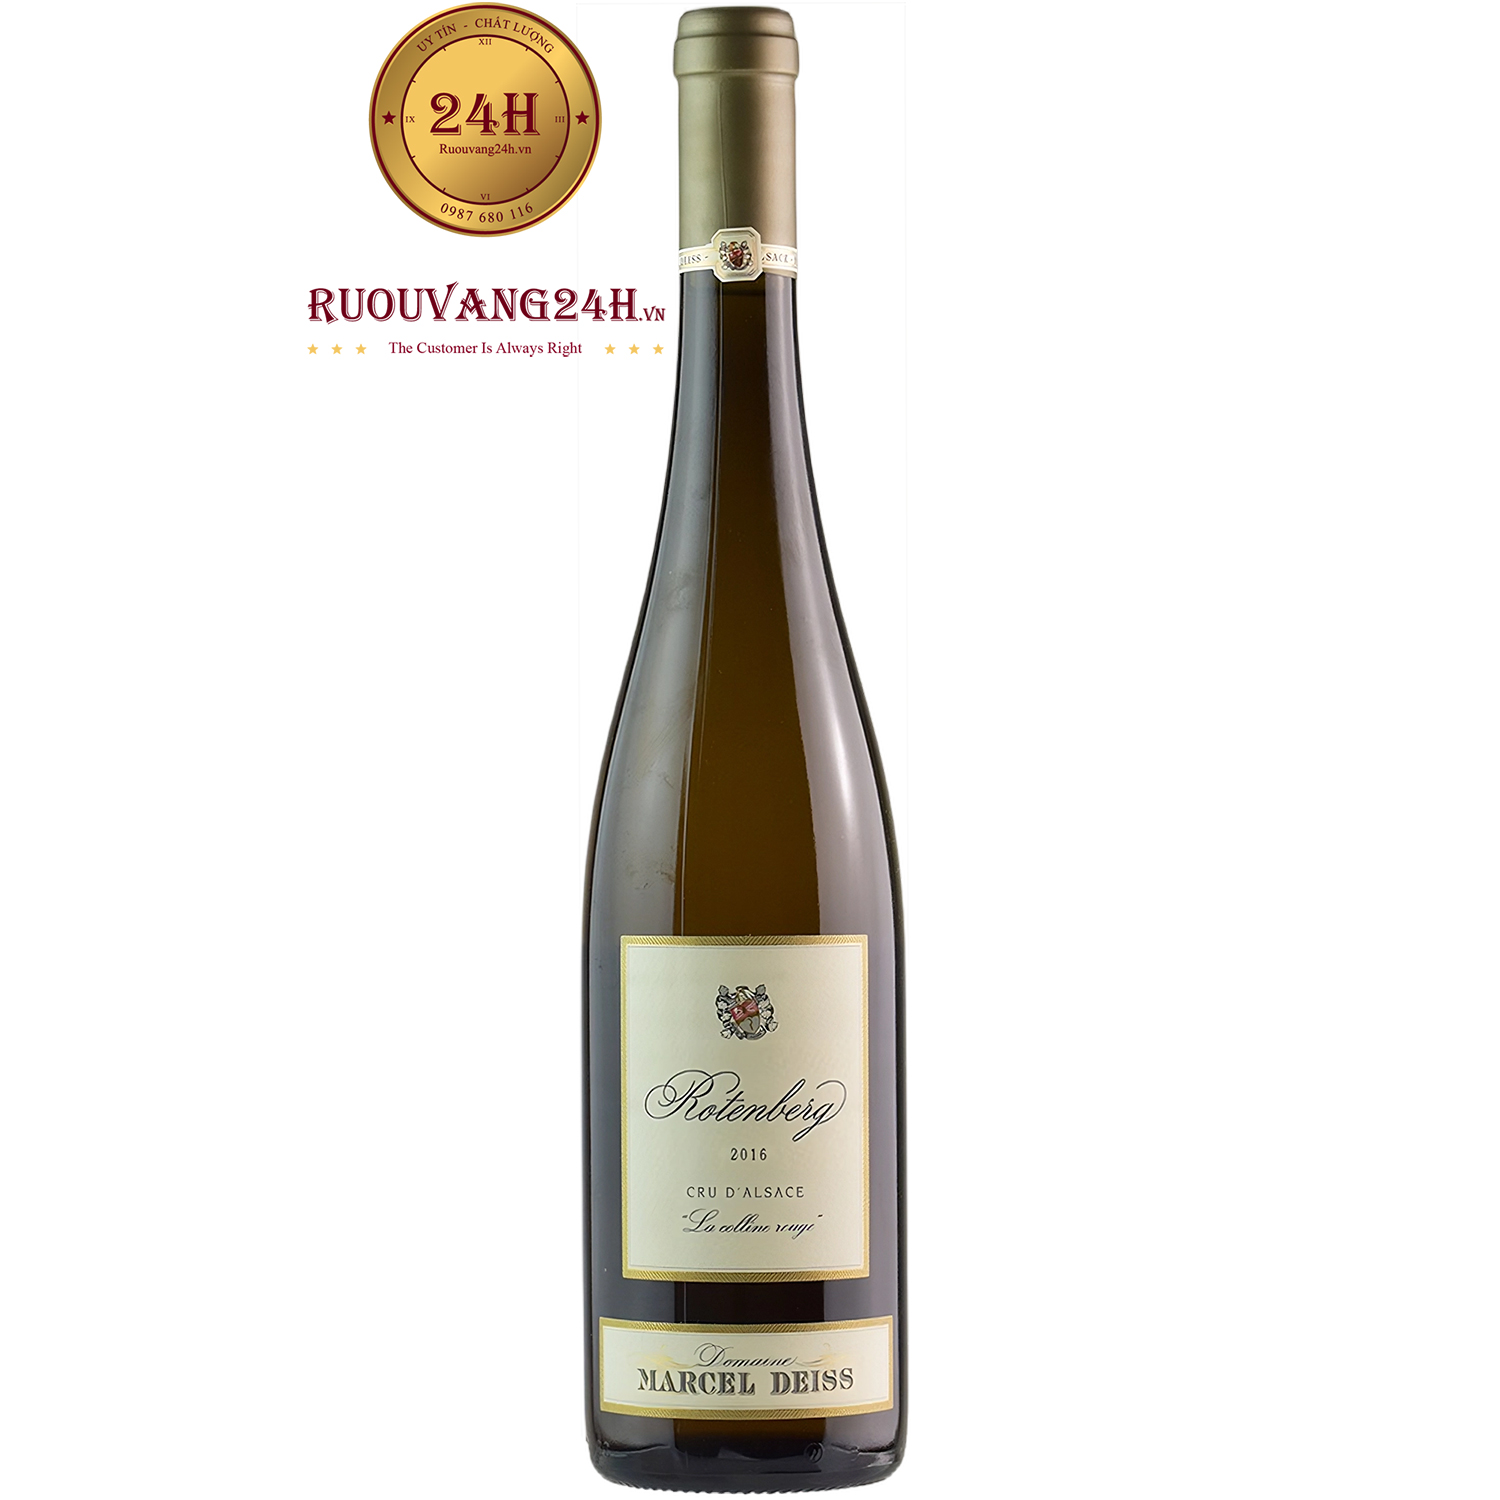 Rượu Vang Marcel Deiss Rotenberg Cru D’Alsace La Colline